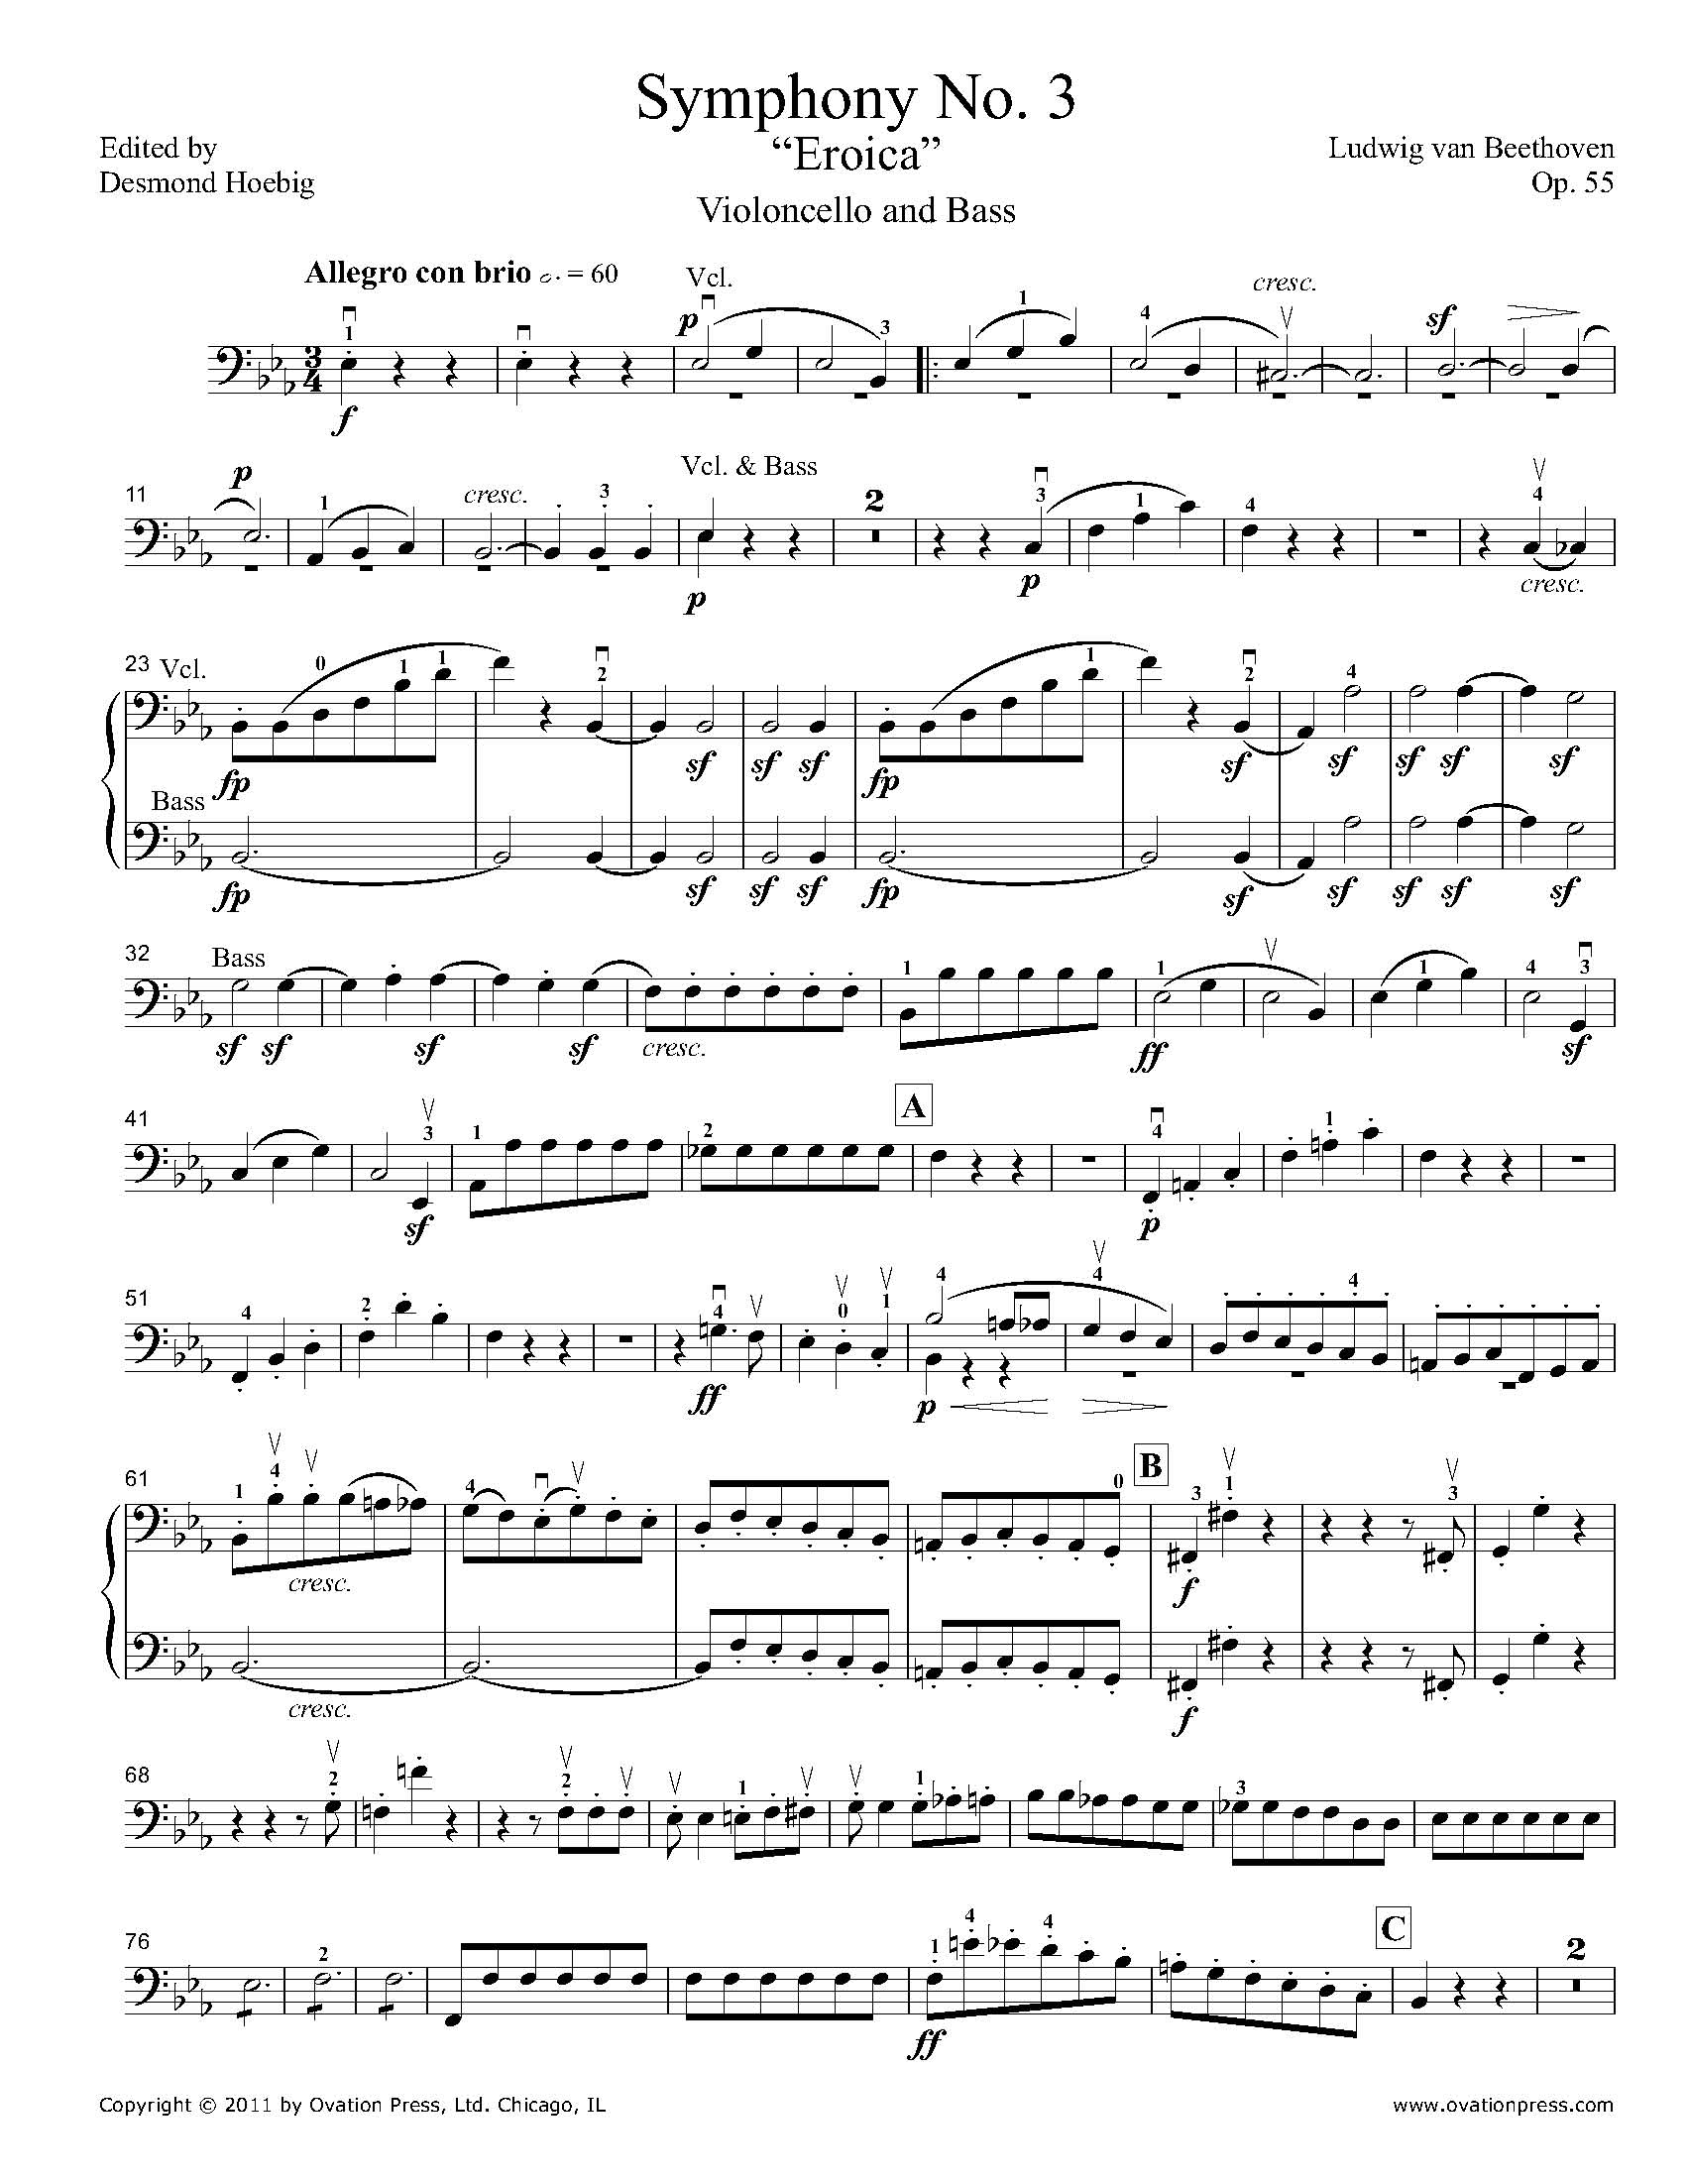 Beethoven Eroica Symphony No. 3 Cello Part by Desmond Hoebig